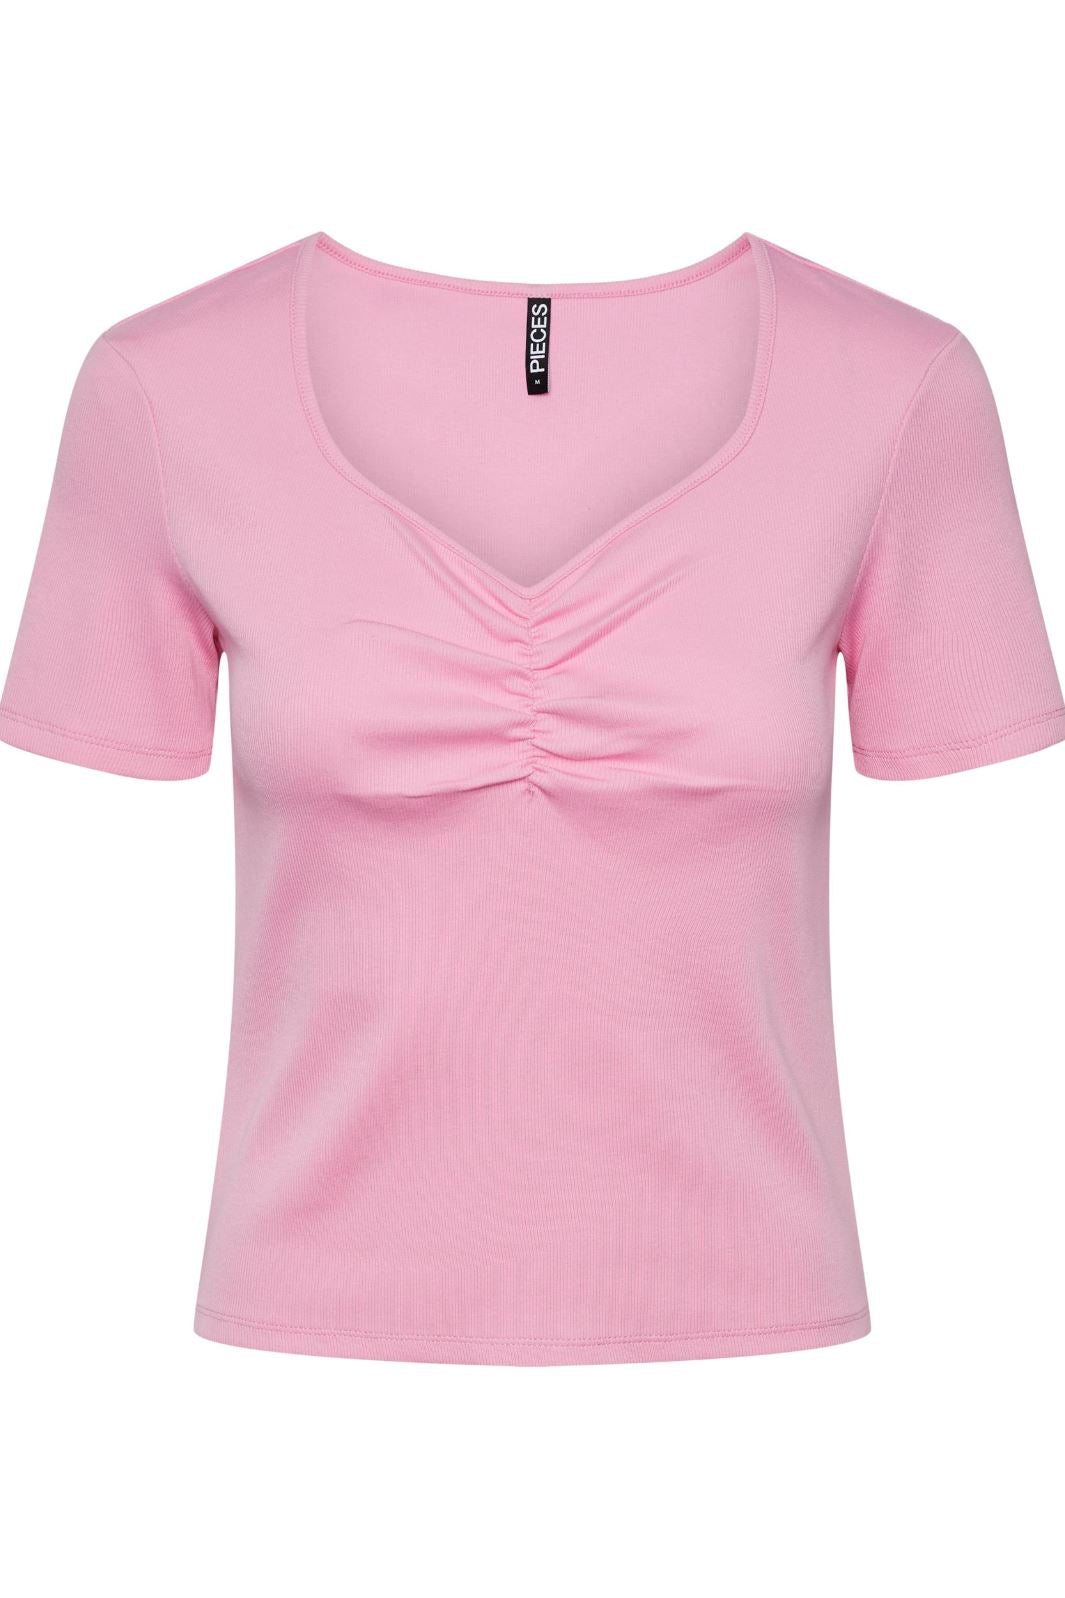 Pieces - Pctania Ss Top Bc - Begonia Pink T-shirts 